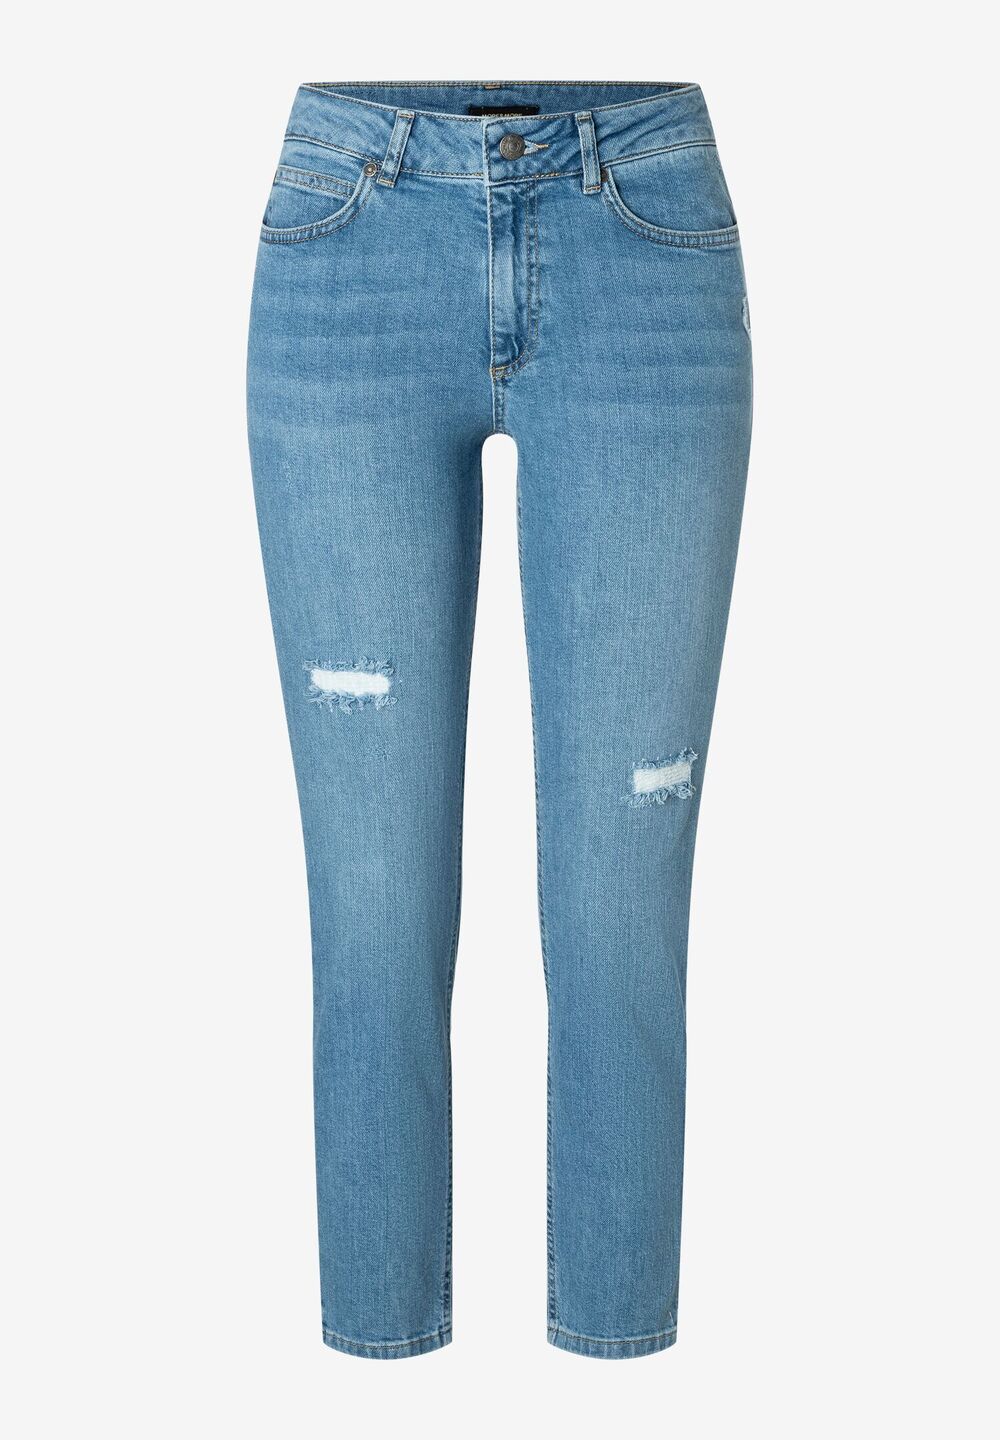 verkürzte Jeans, Sommer-Kollektion, denimRückansicht